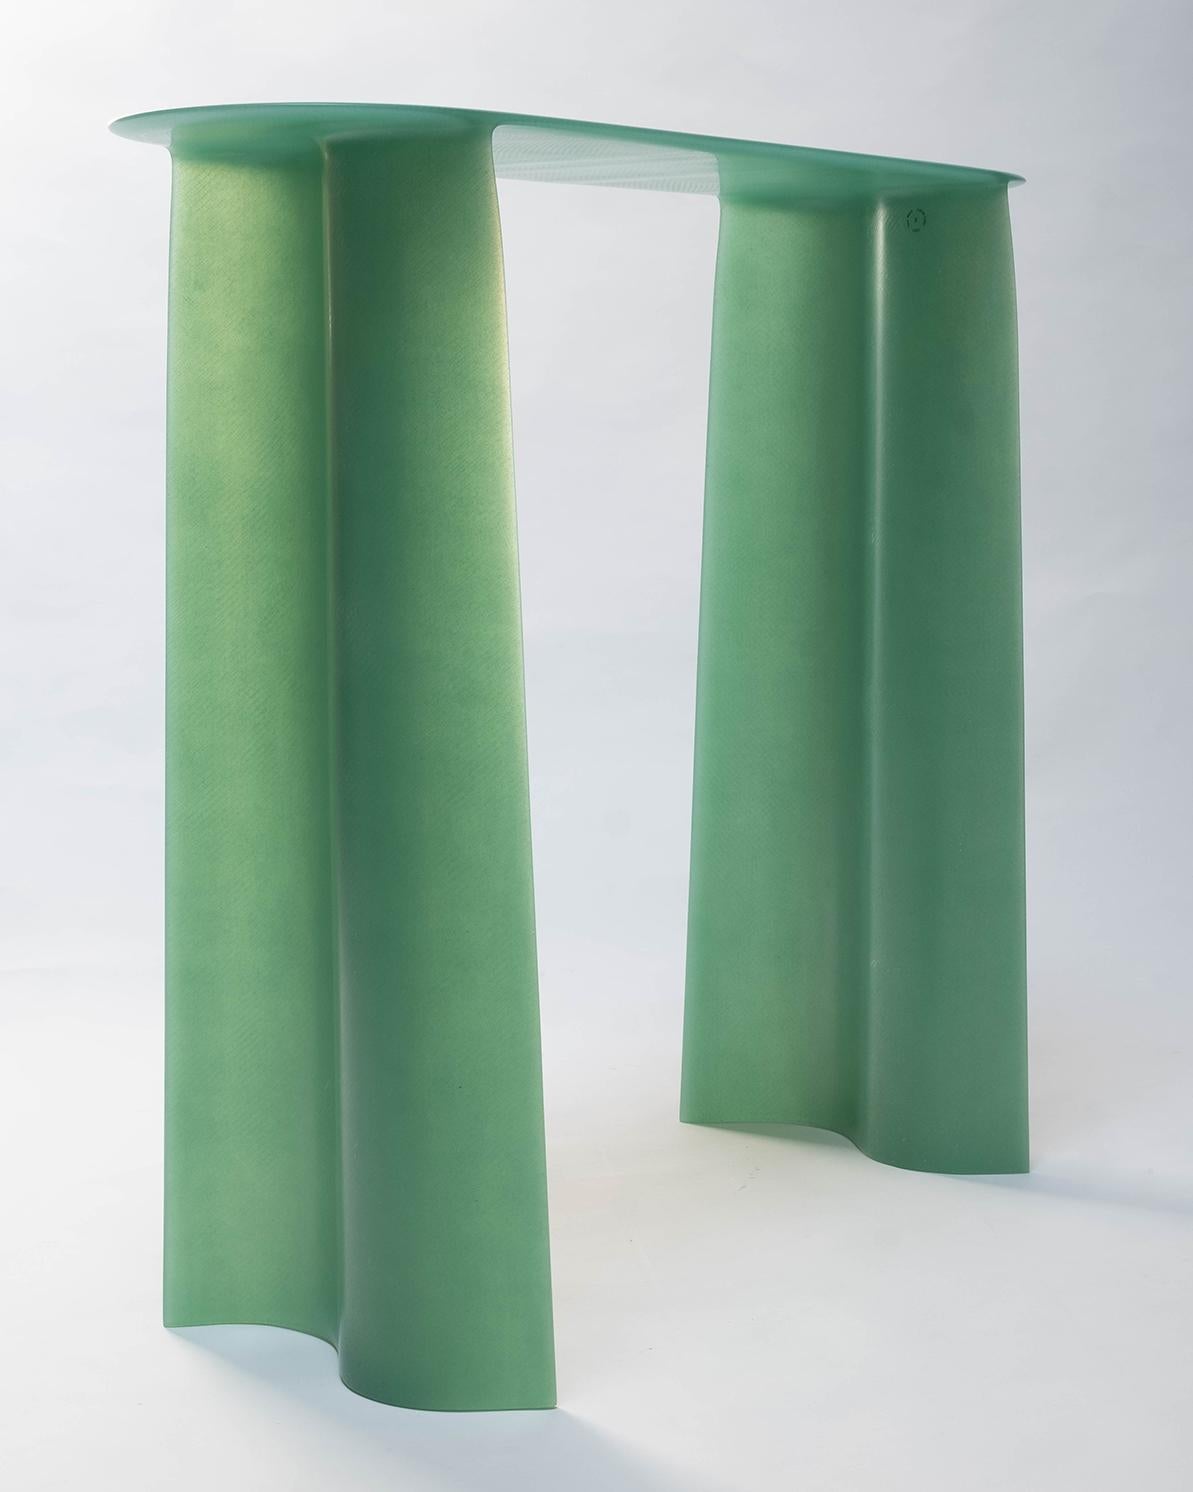 Dutch Contemporary Green Fiberglass, New Wave Console 140 cm, by Lukas Cober